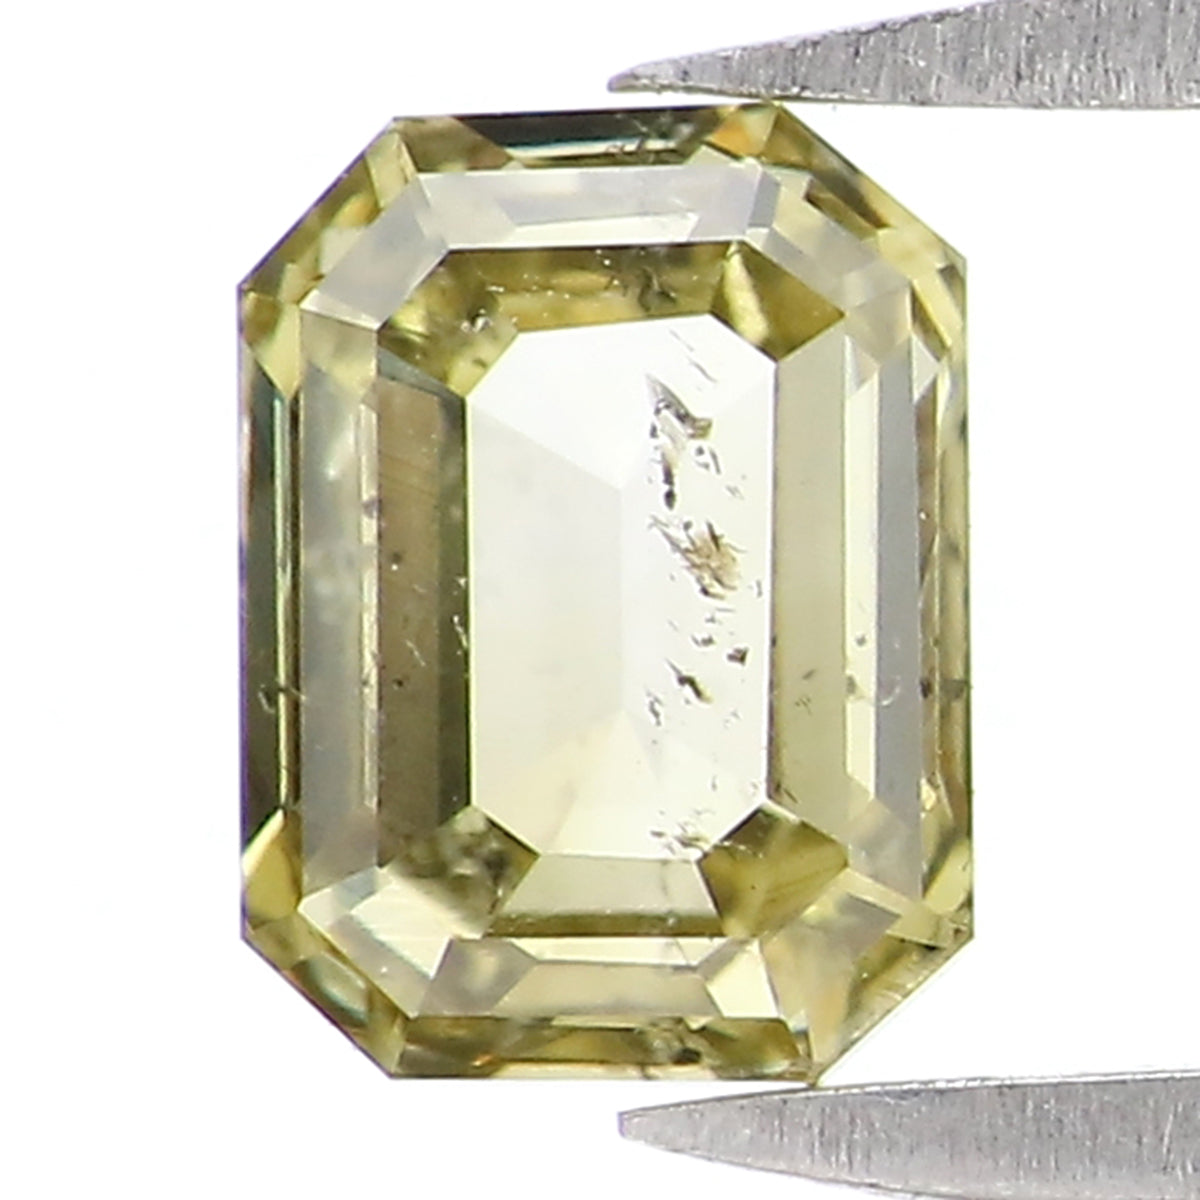 0.67 CT Natural Loose Emerald Shape Diamond Green Color Emerald Shape Diamond 5.75 MM Natural Green Color Emerald Rose Cut Diamond QL2548